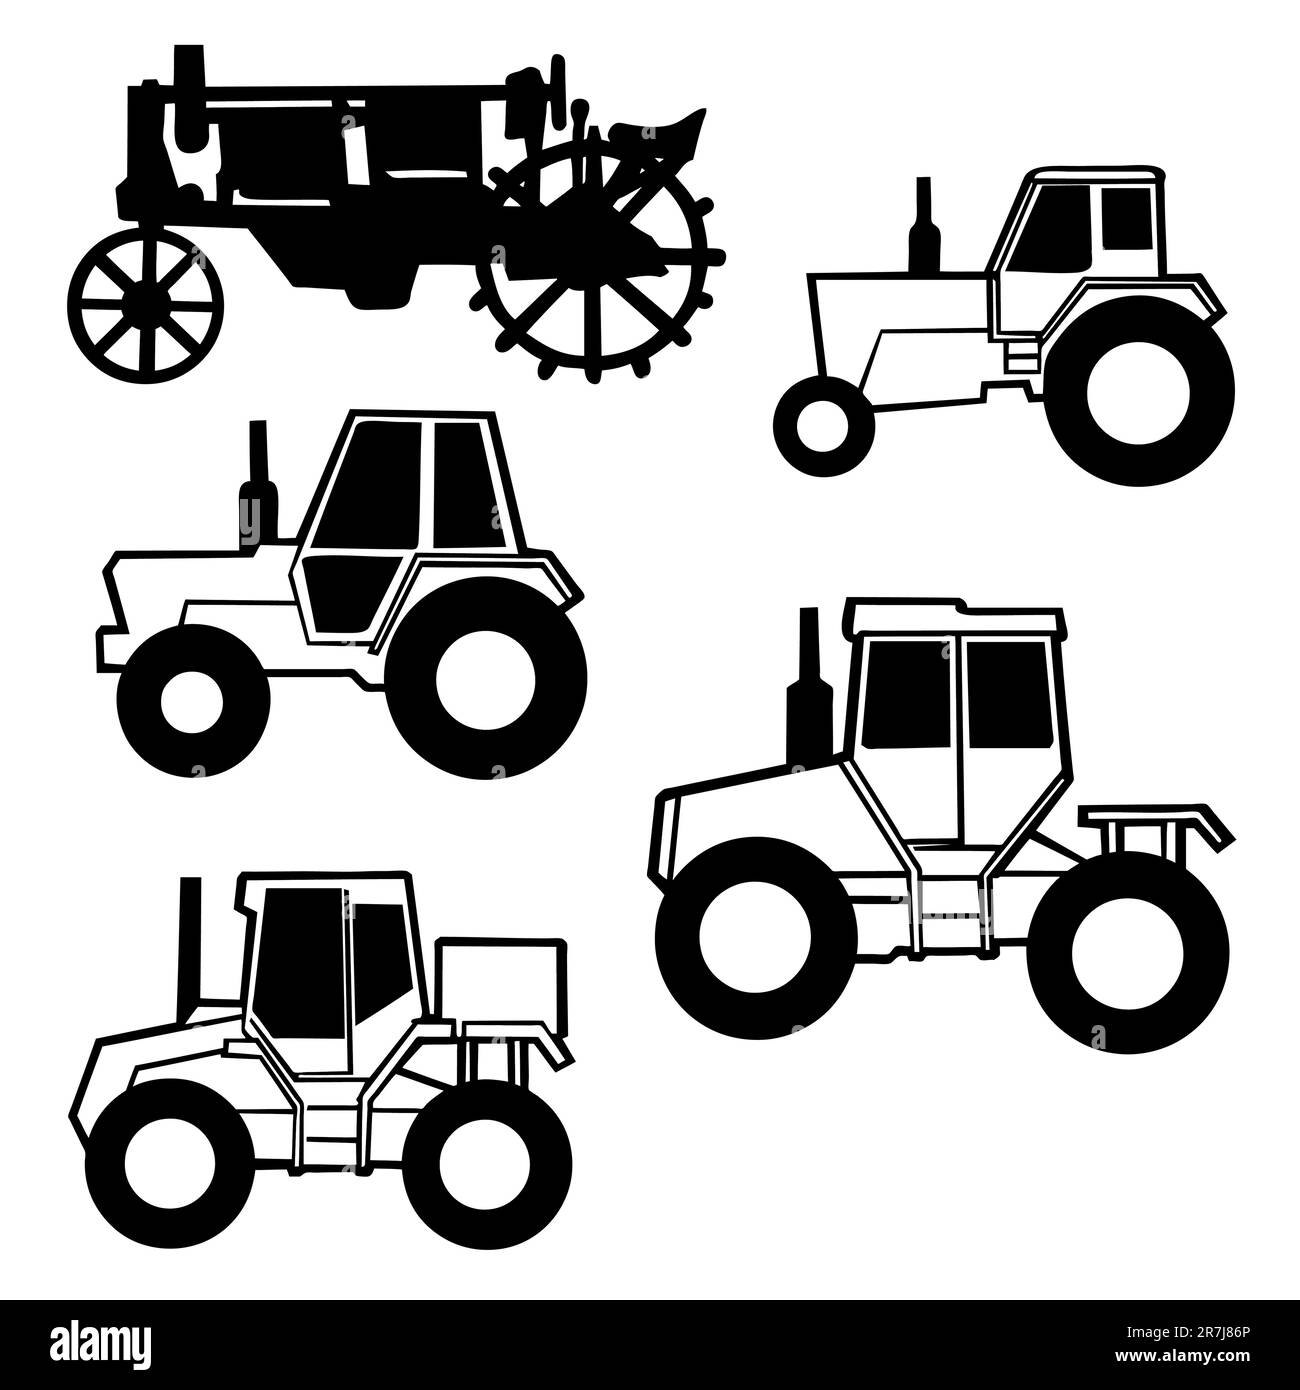 Moderner industrieller traktor Stock-Vektorgrafiken kaufen - Alamy